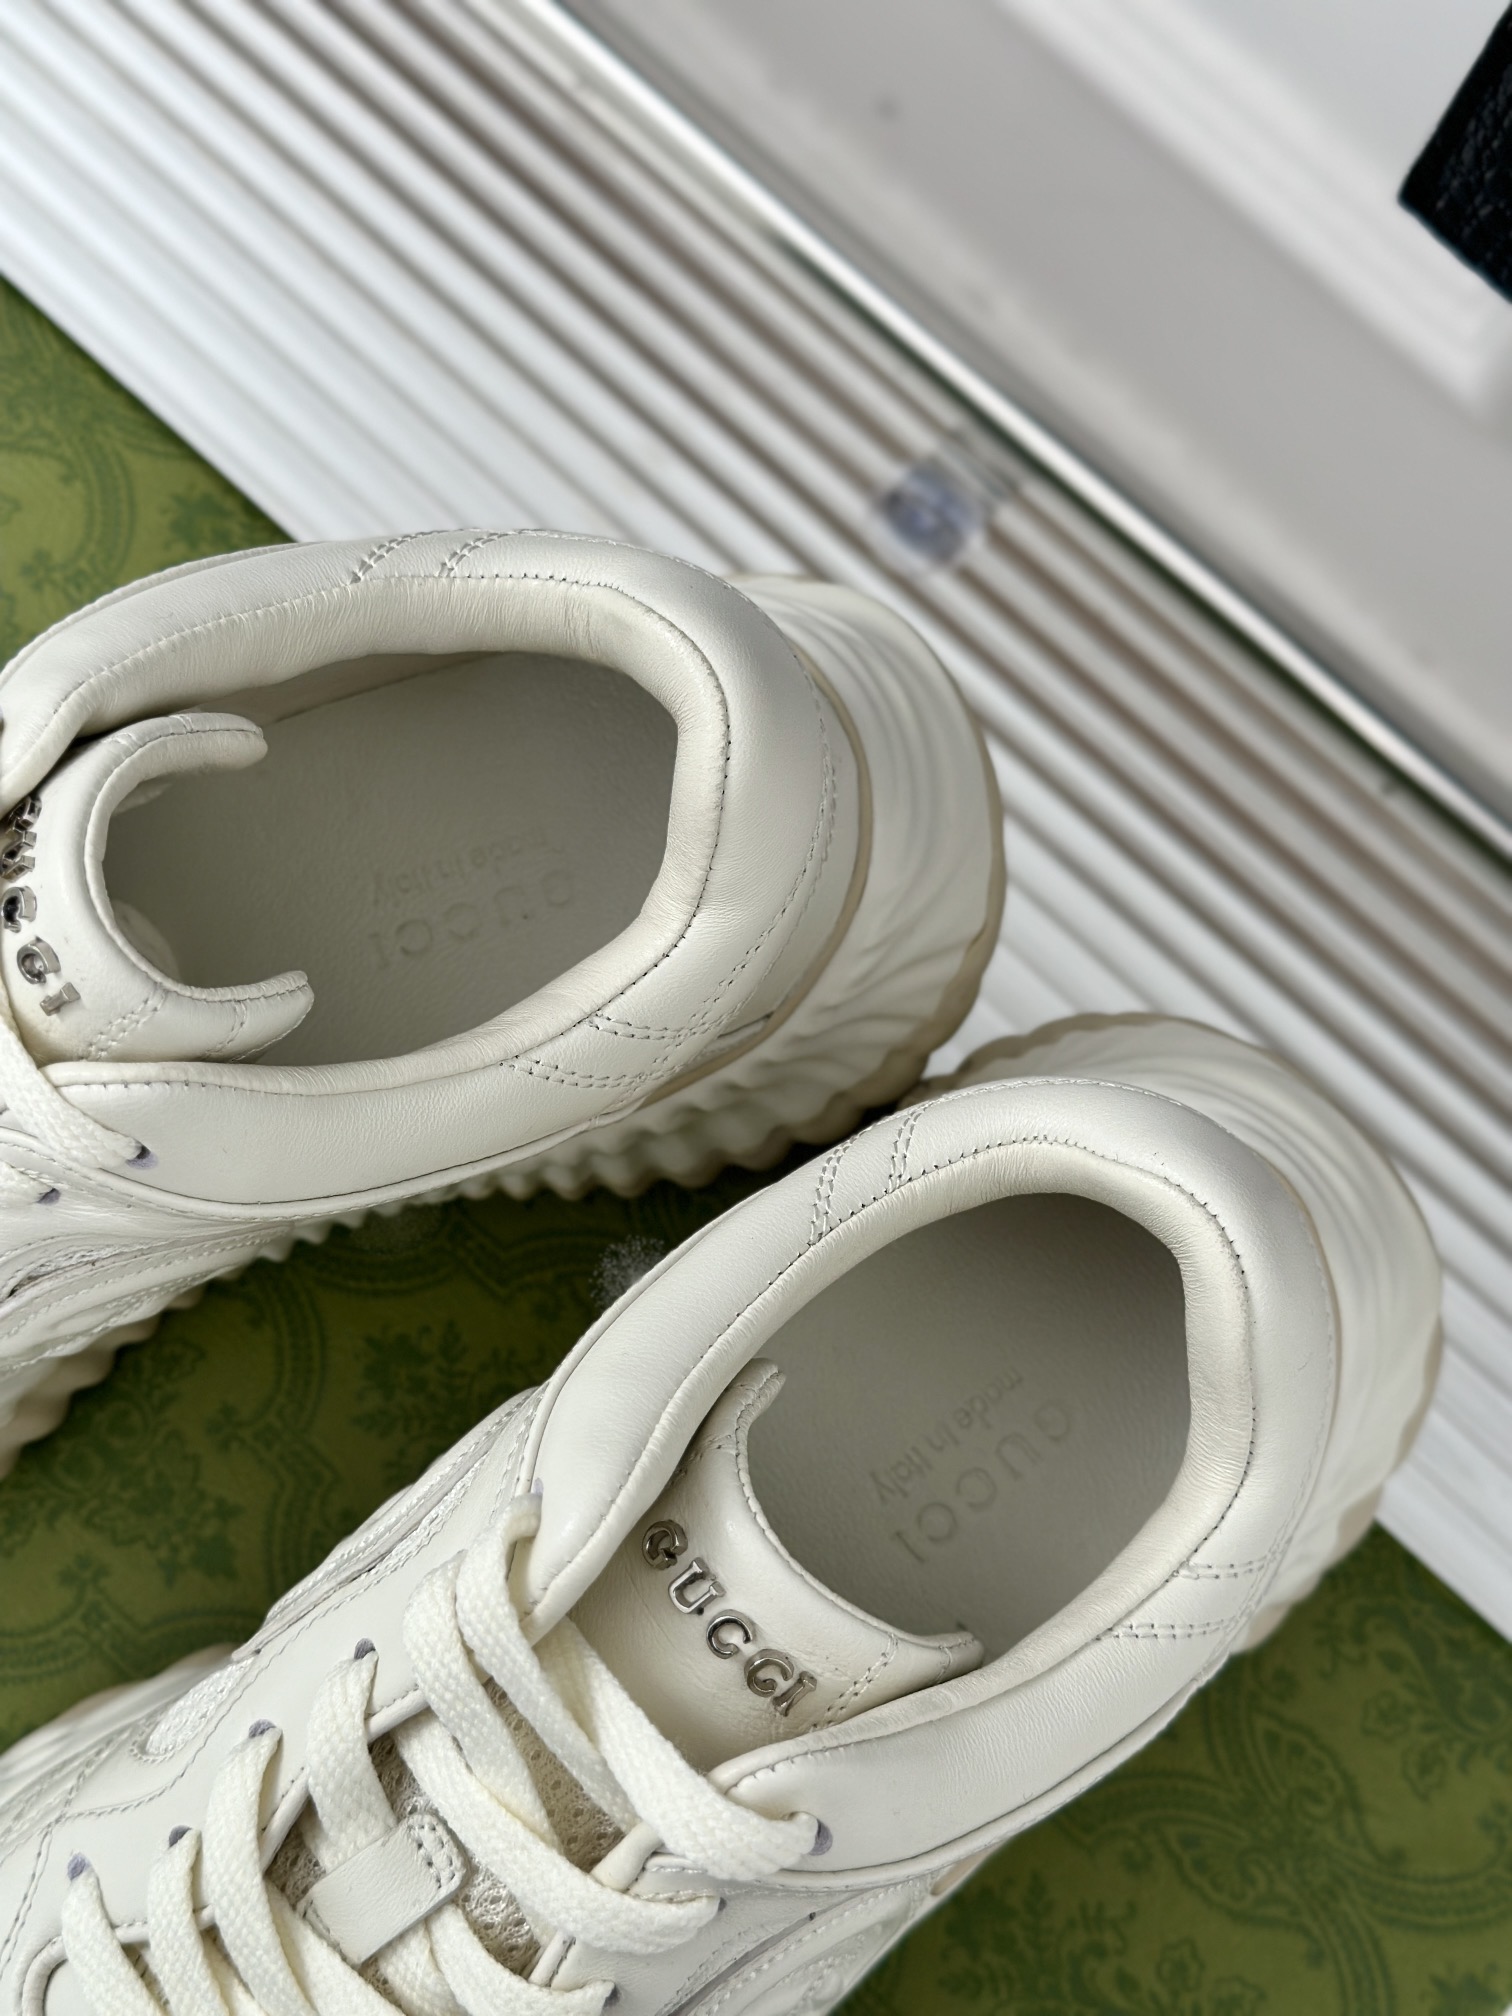 GUCC*24S经典休闲运动鞋全新爆款系列️高颜值板鞋就让人很难拒jue无论哪个季节都是“百搭利器”鞋型